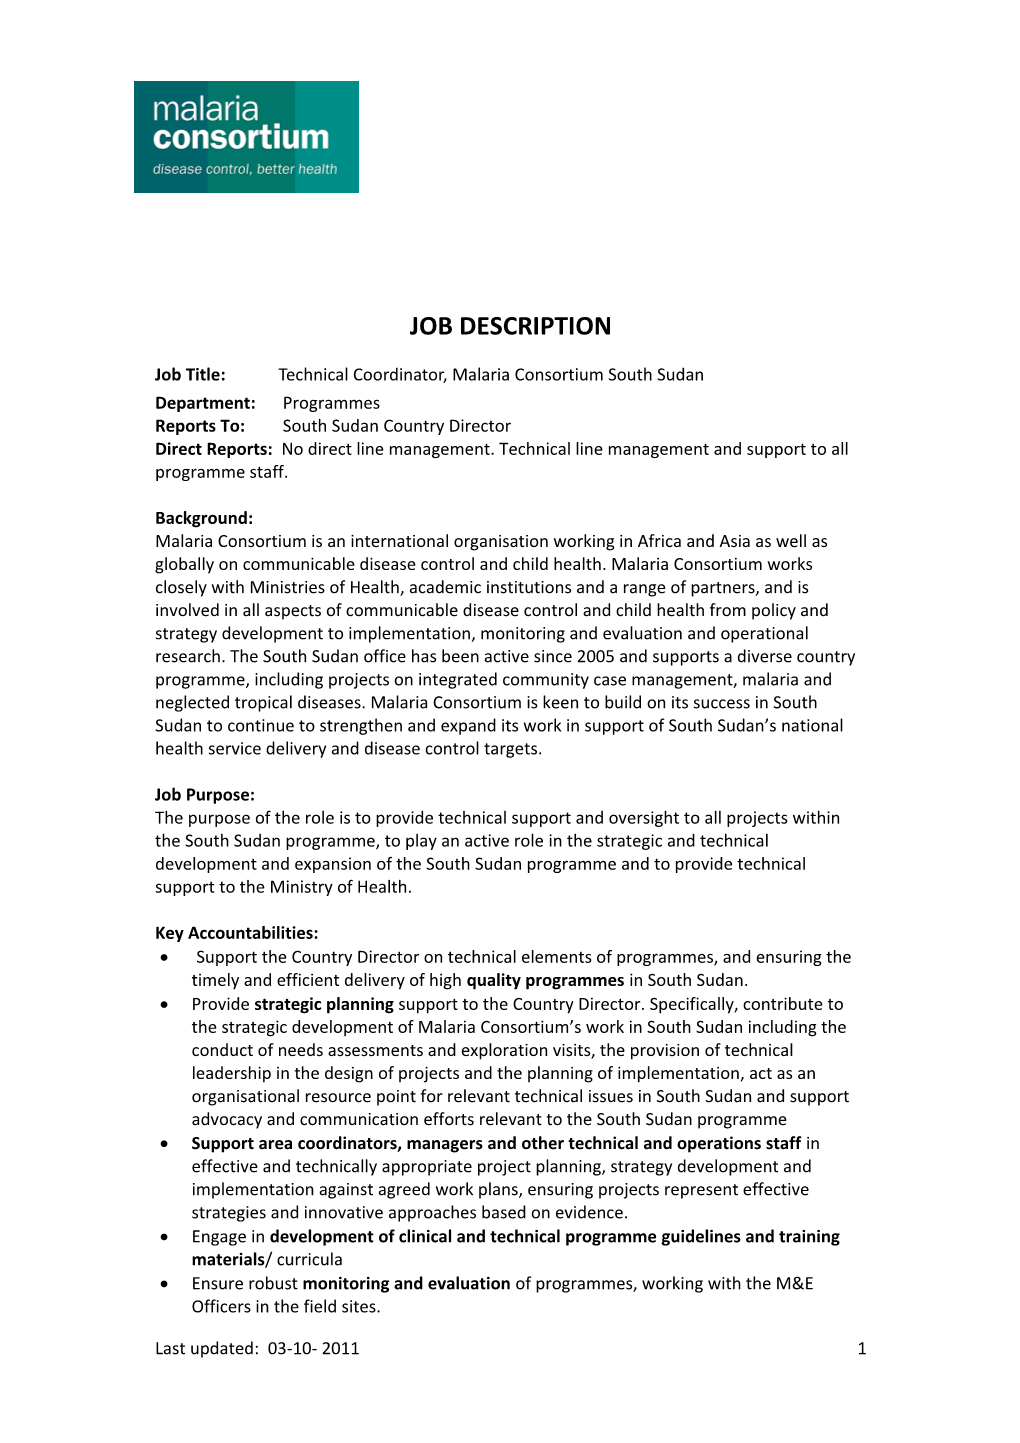 Job Title: Technical Coordinator, Malaria Consortium South Sudan